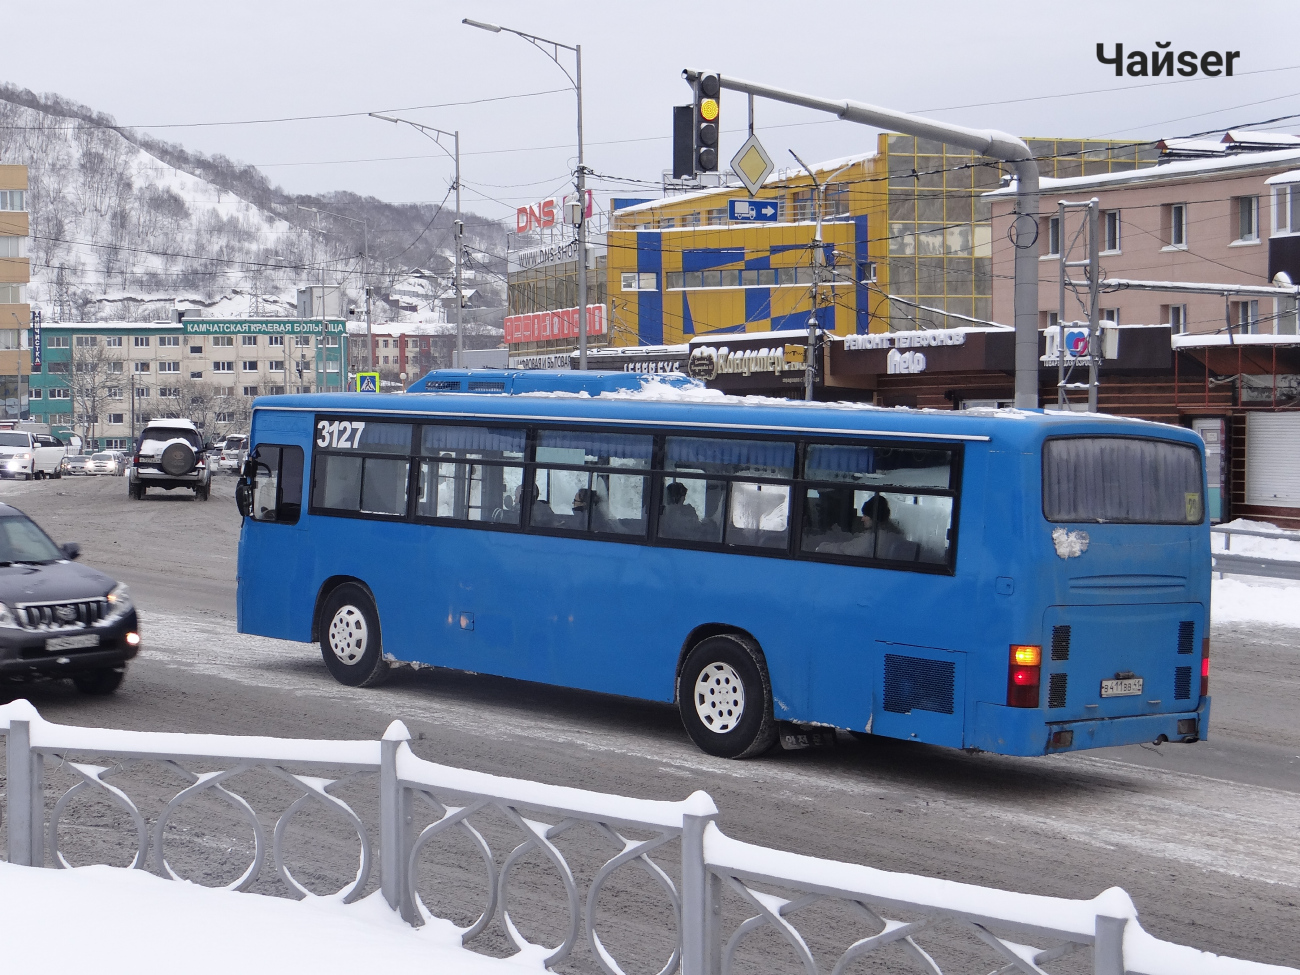 Petropavlovsk-Kamchatskiy, Daewoo BS106 (Busan) # 3127